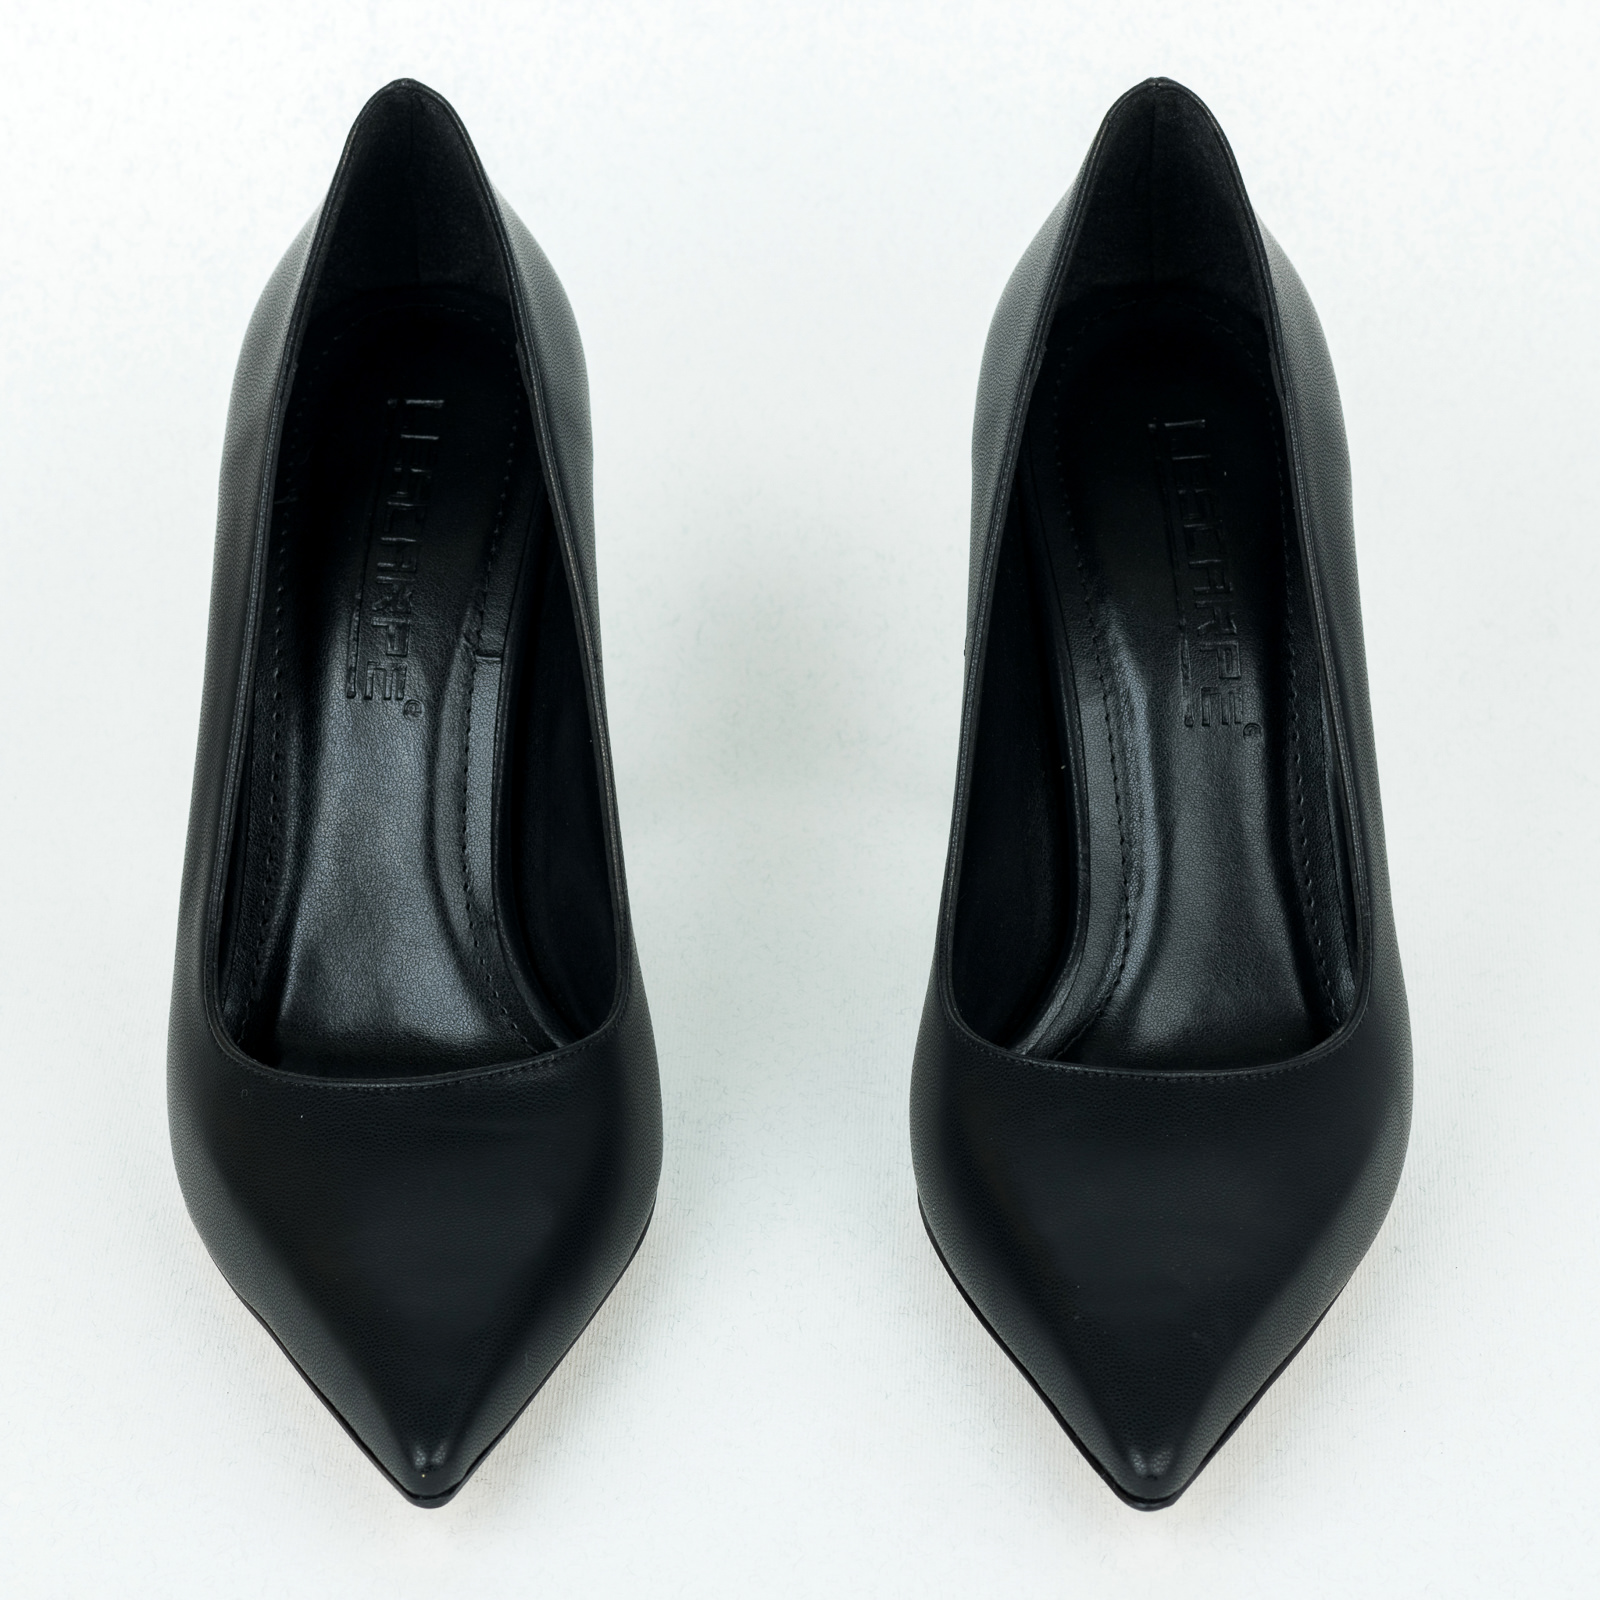 High-heels B597 - BLACK